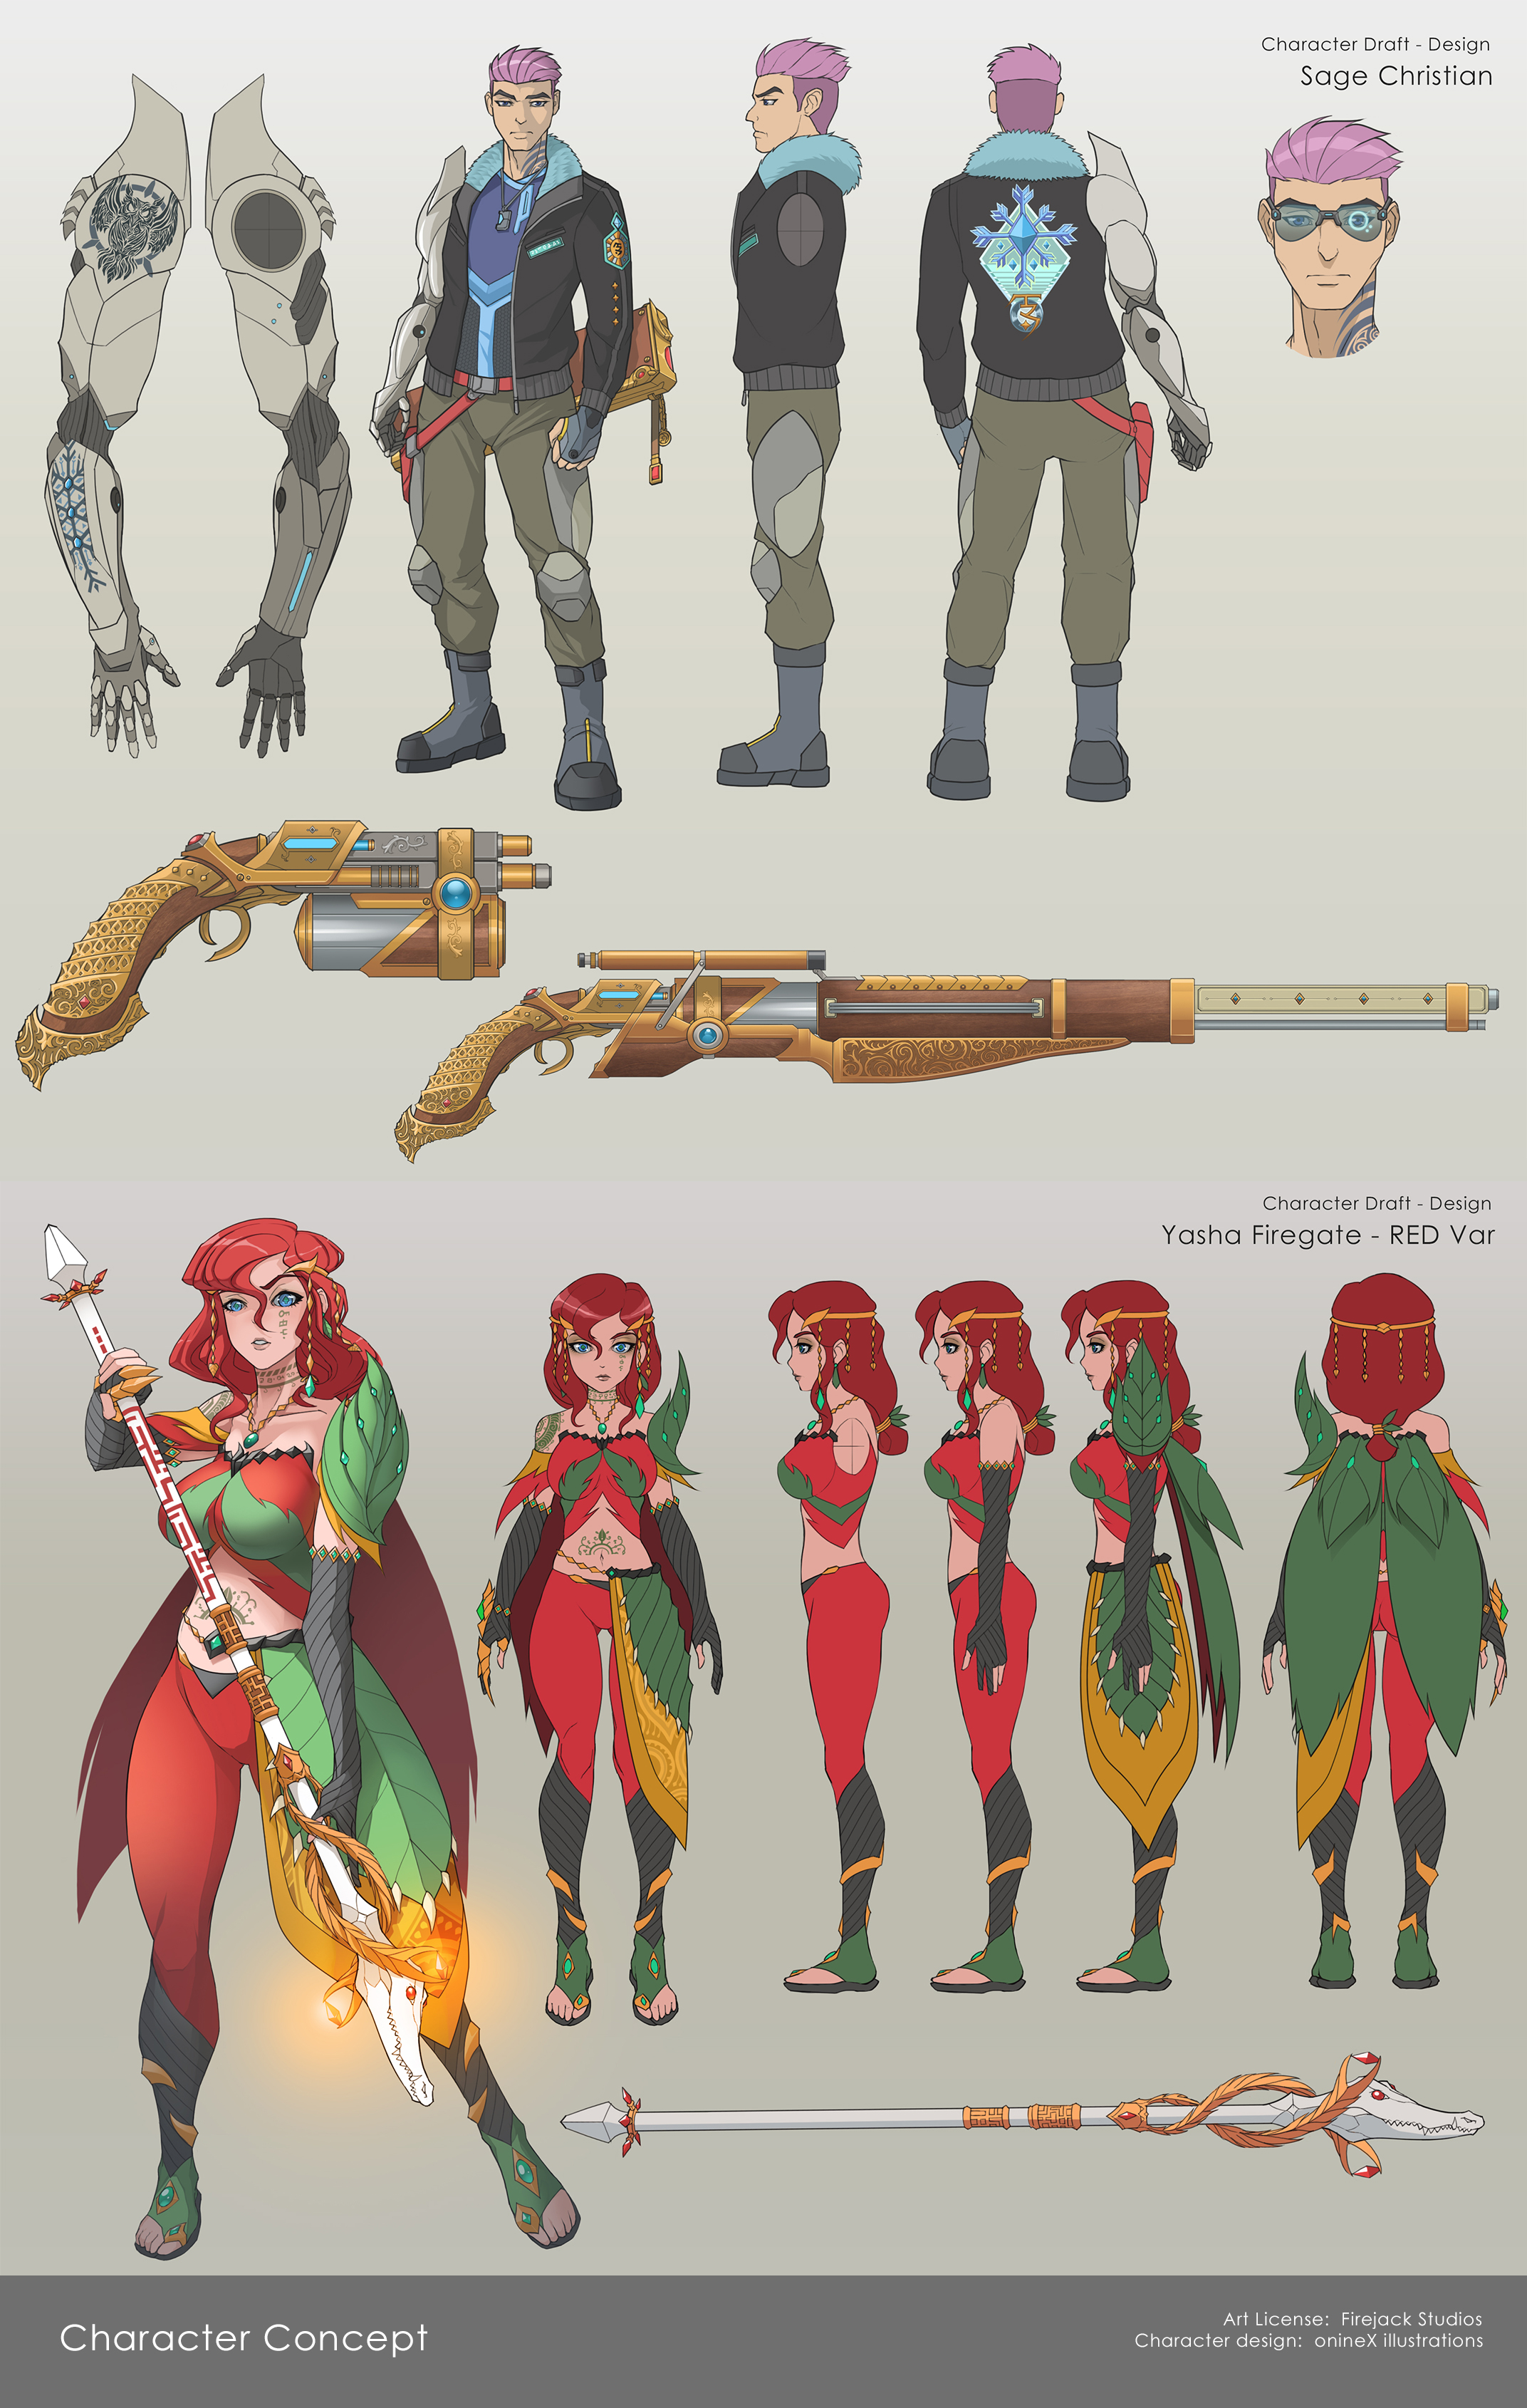 Character Draft - Design

Sage Christian

 

 

Character Draft - Design

Yasha Firegate - RED Var

 

Art License: Firejack Studios

Character Concept Character design: onineX illustrations